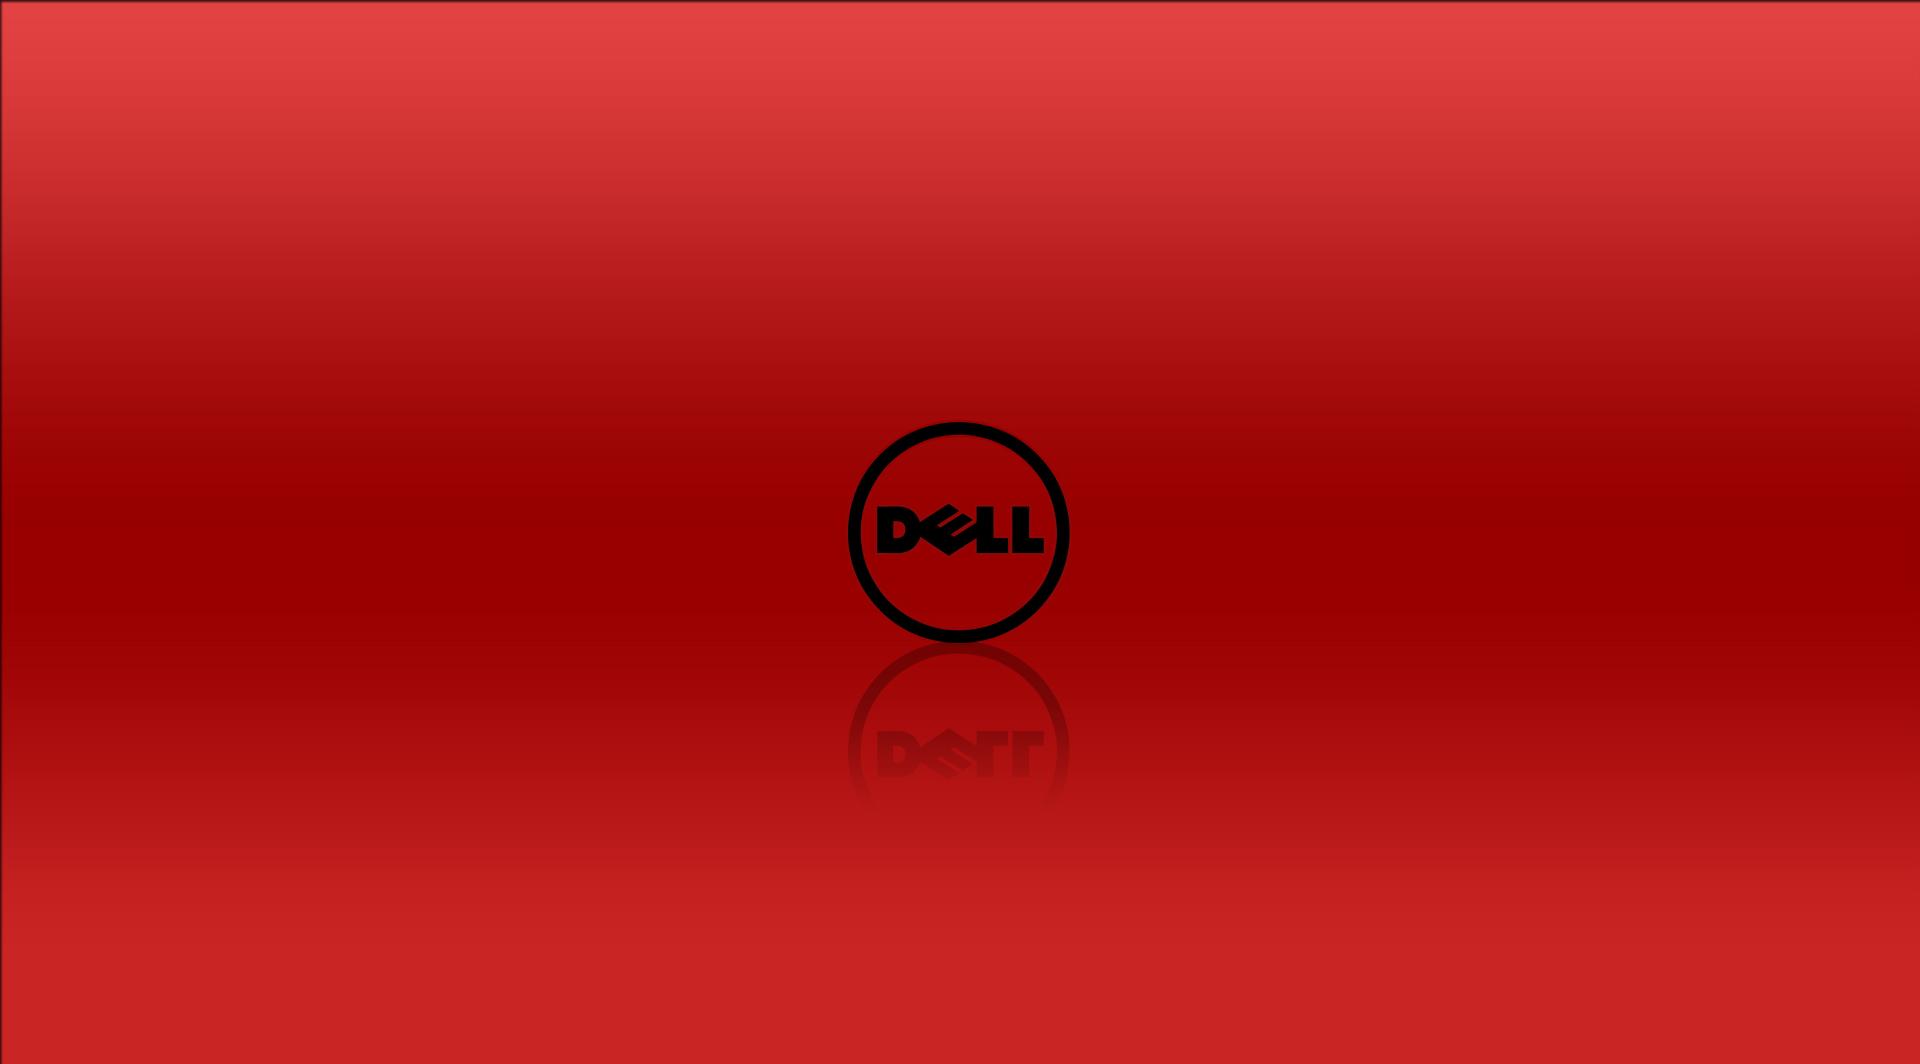 Dell Wallpaper Hd Download